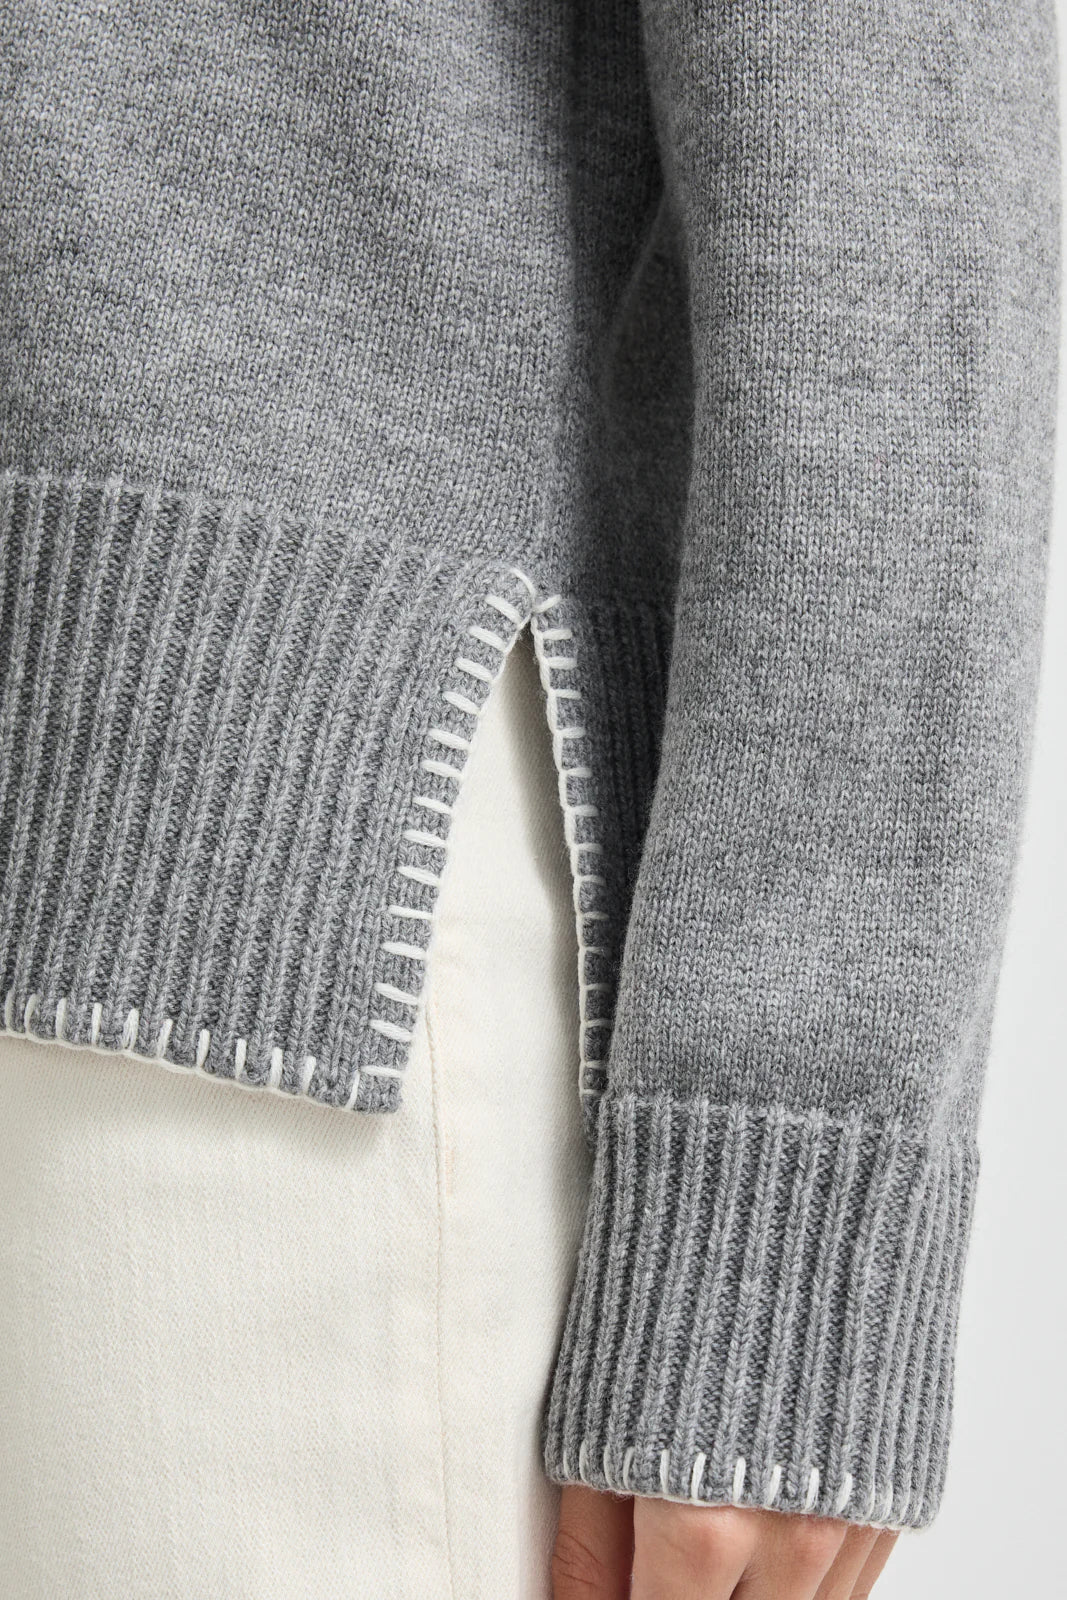 Blanket Stitch Jumper - Mid Grey